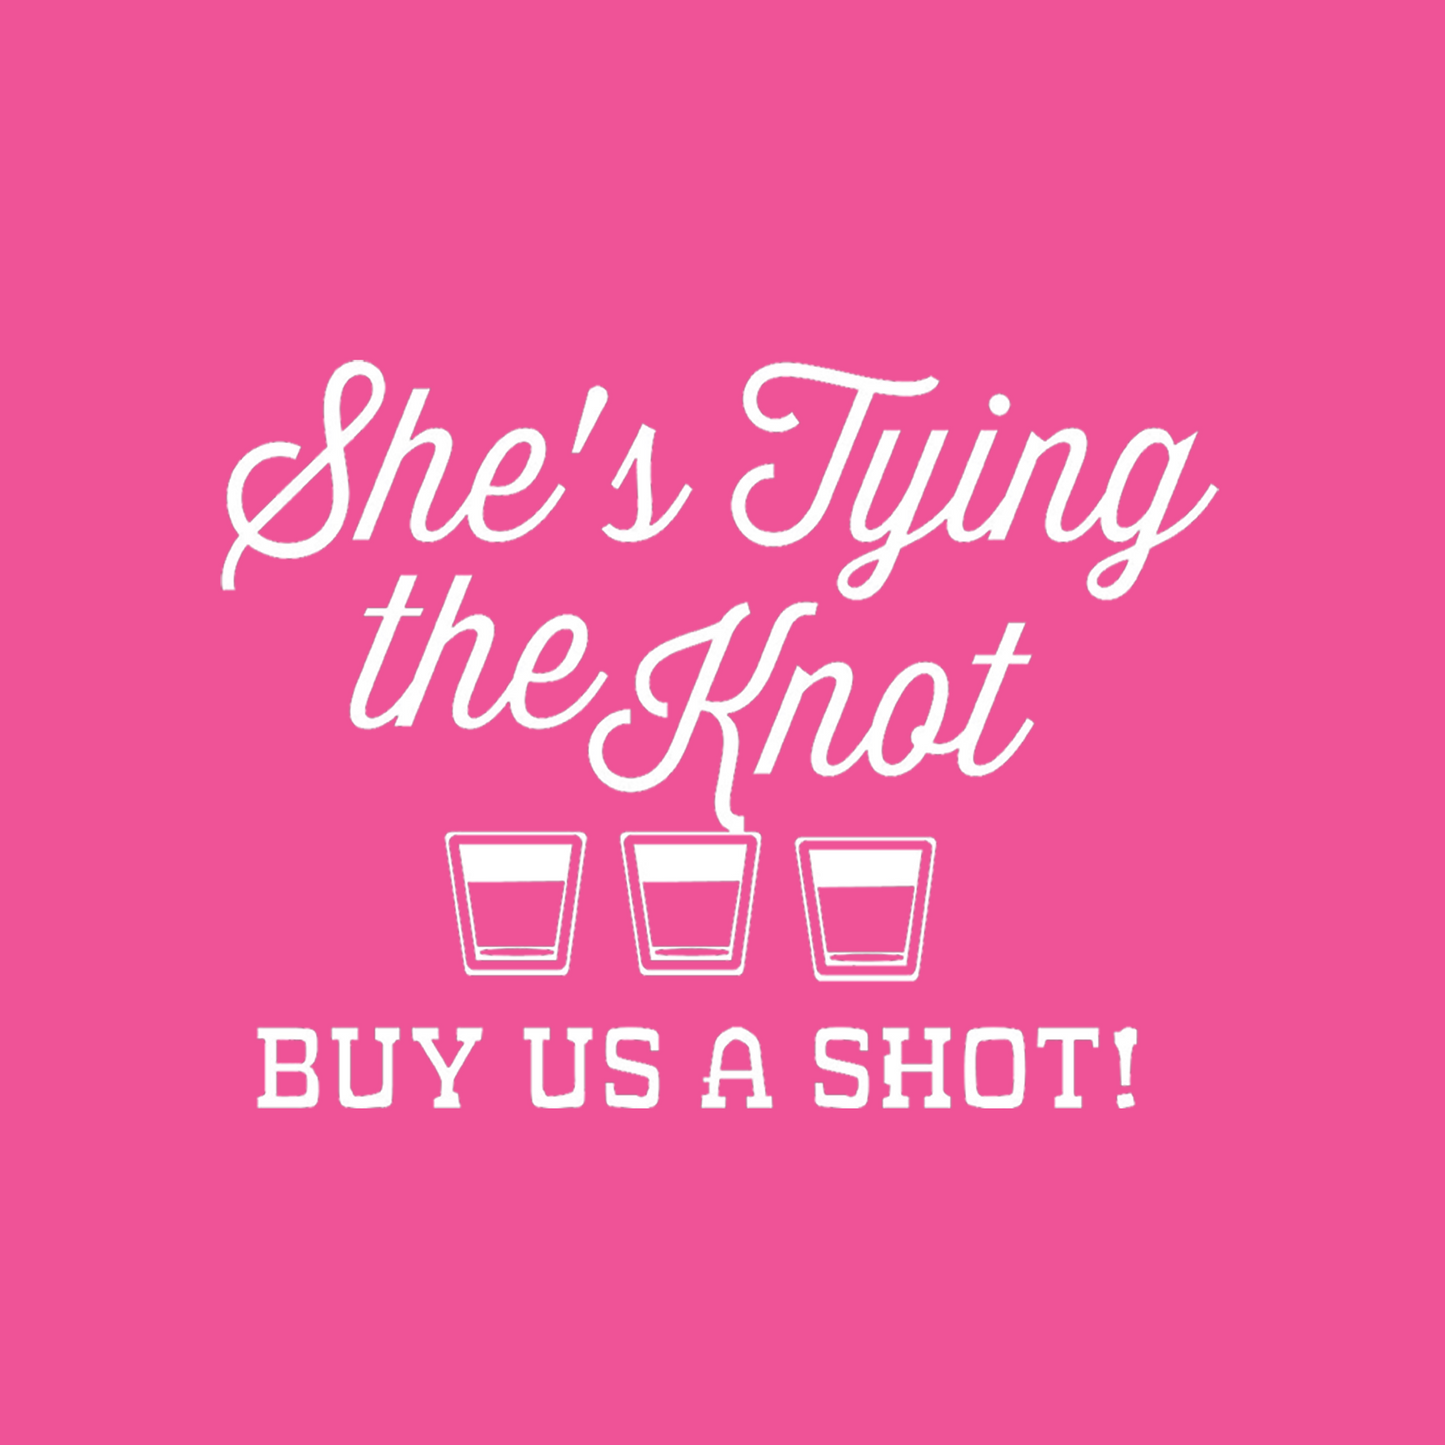 Buy us a shot